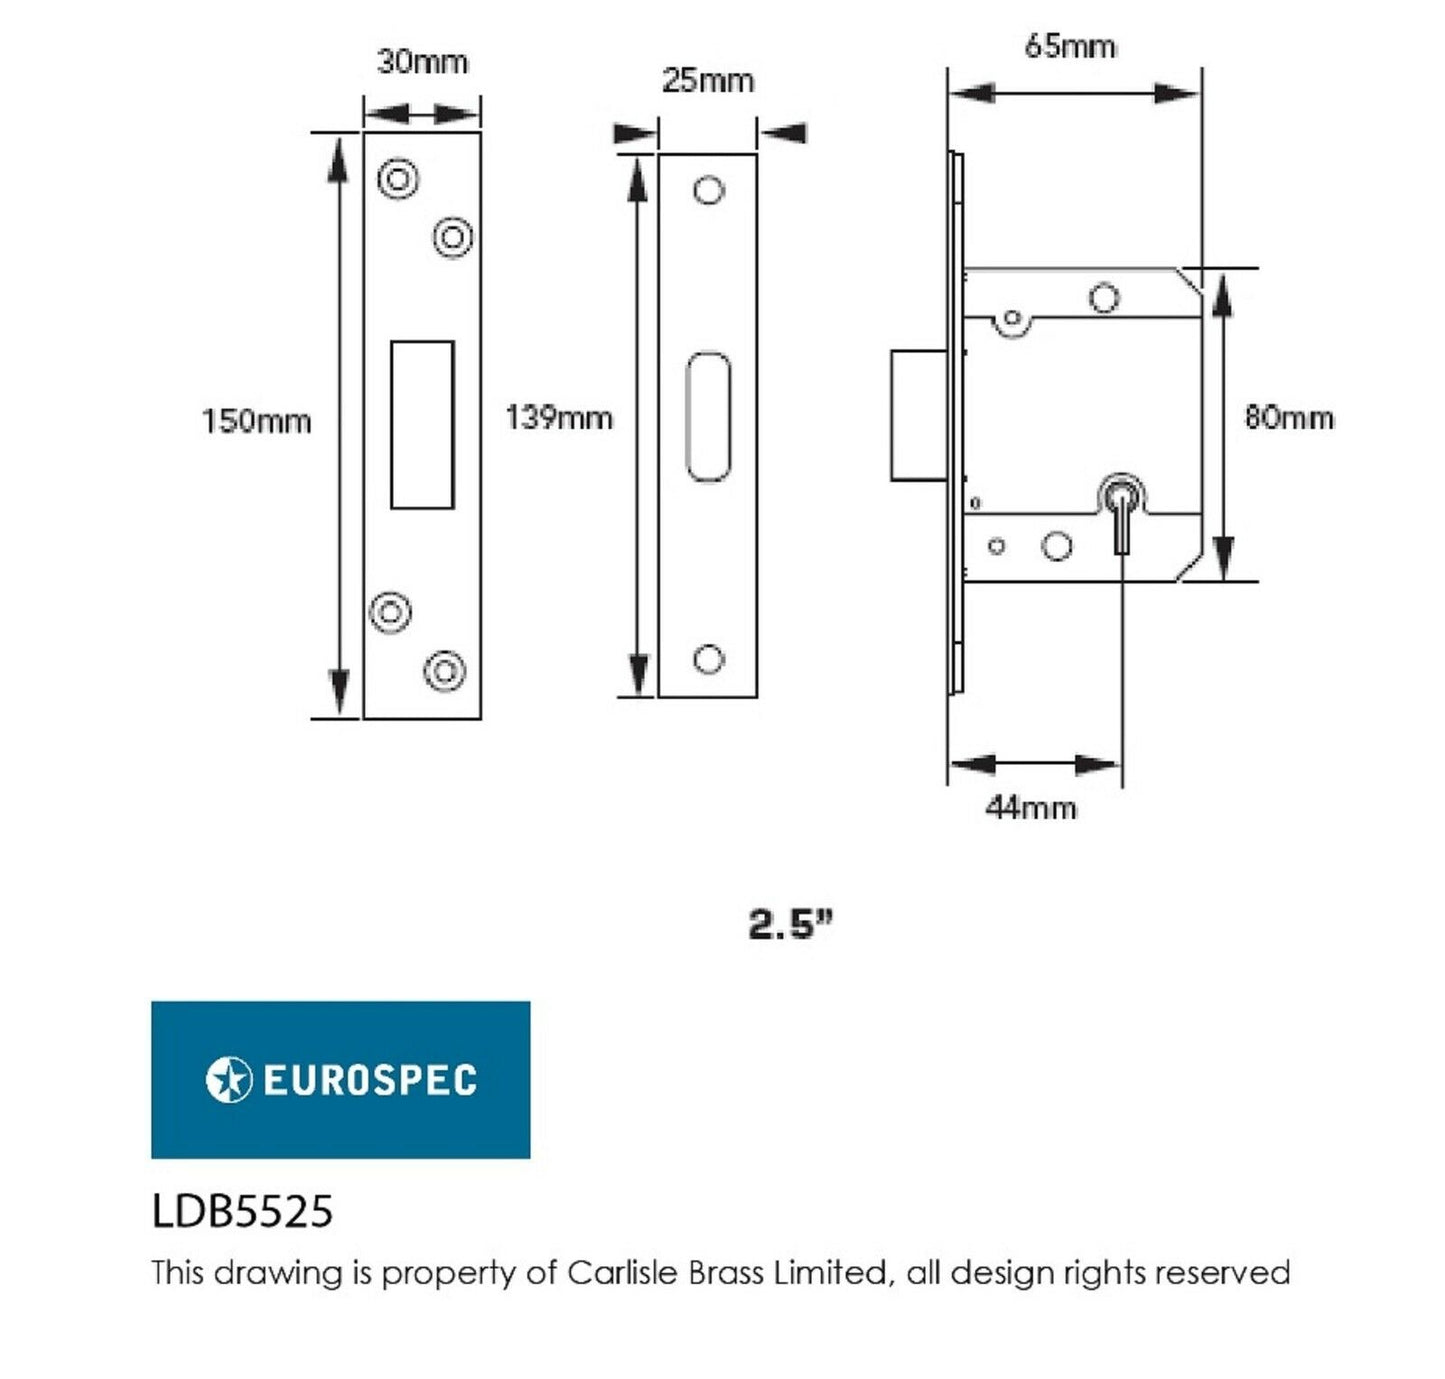 Carlisle Brass - LDB5525 - EUROSPEC Easi T 5 Lever BS Deadlock (PREPACK)